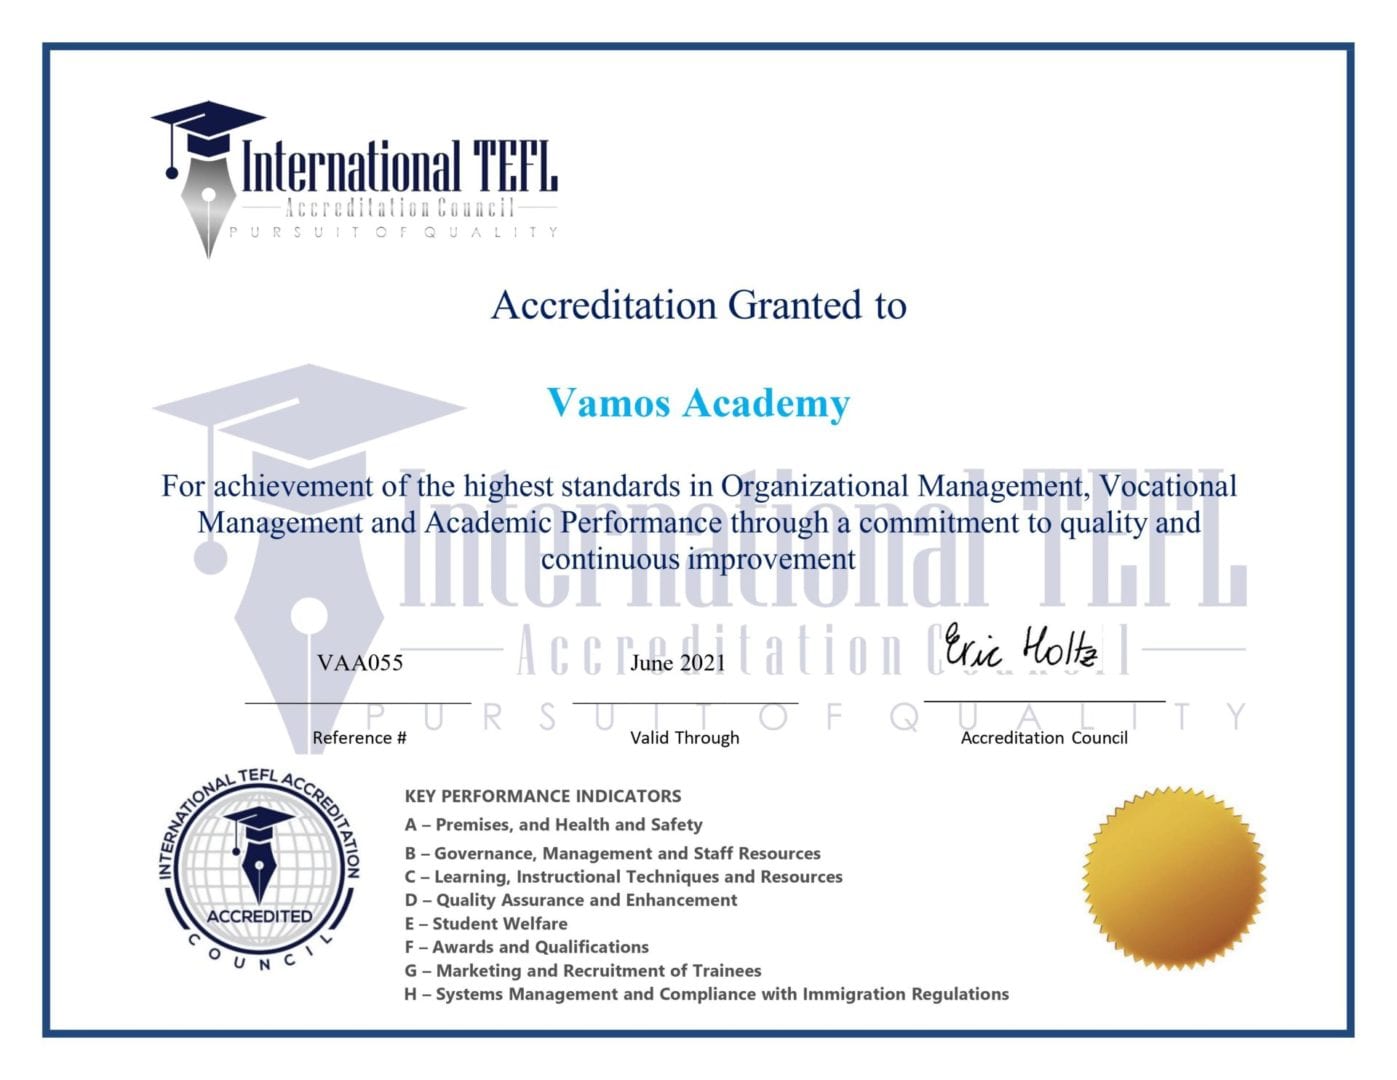 vamos-academy-tefl-certification-accredited-school